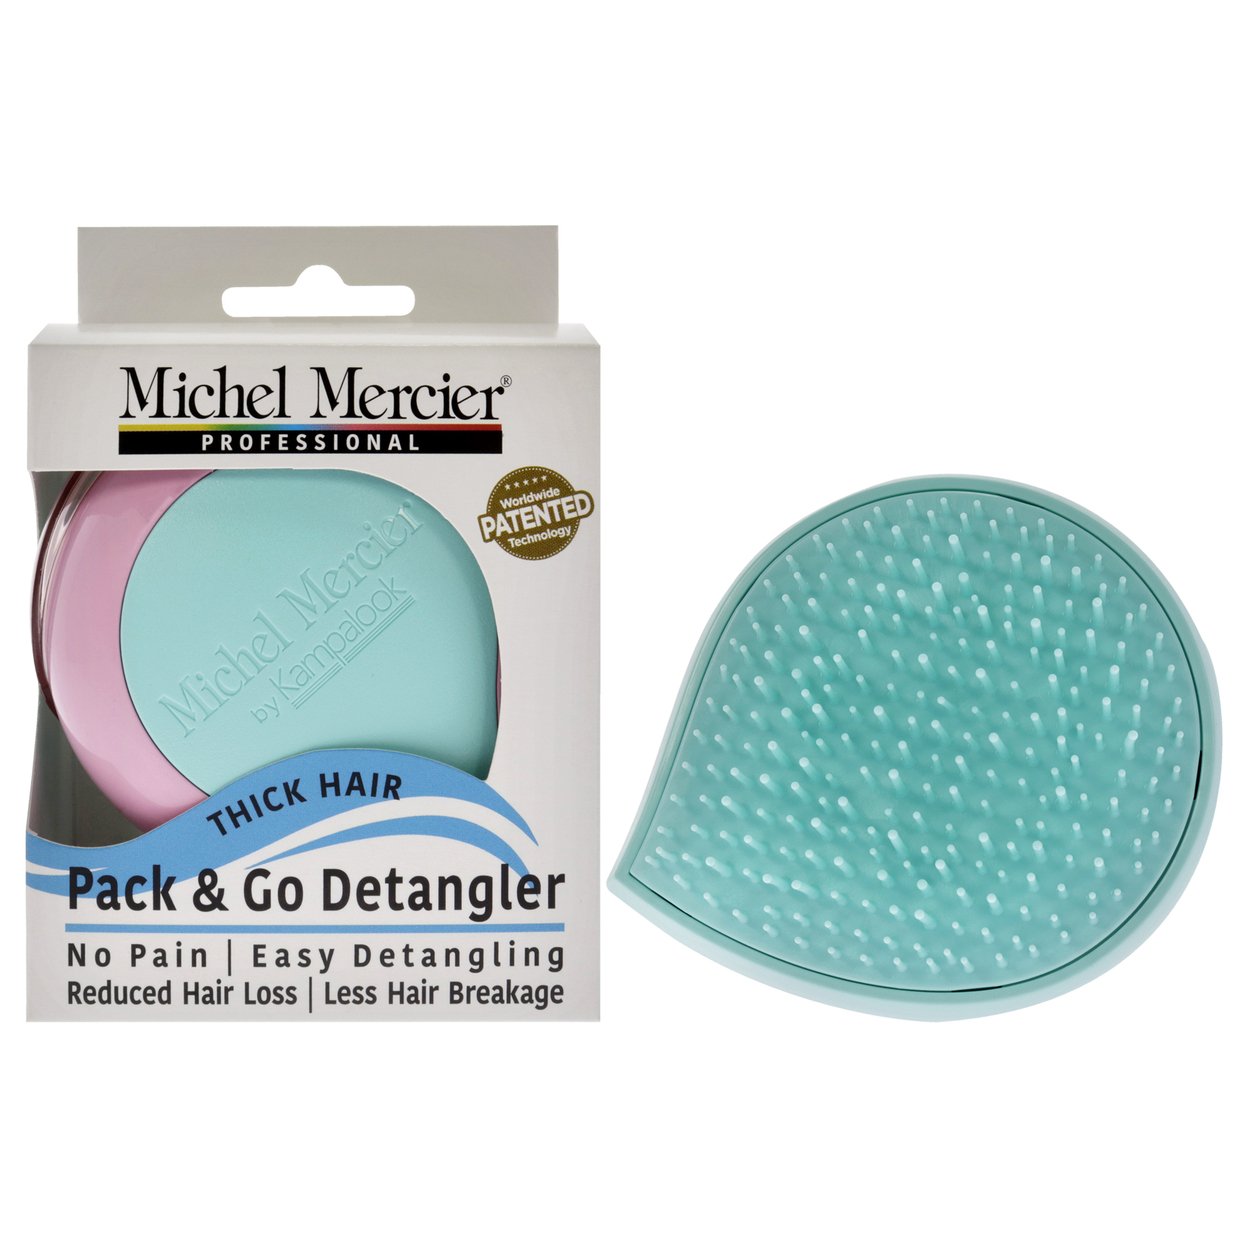 Michel Mercier Pack And Go Detangler Thick Hair - Turquoise-Pink Hair Brush 1 Pc